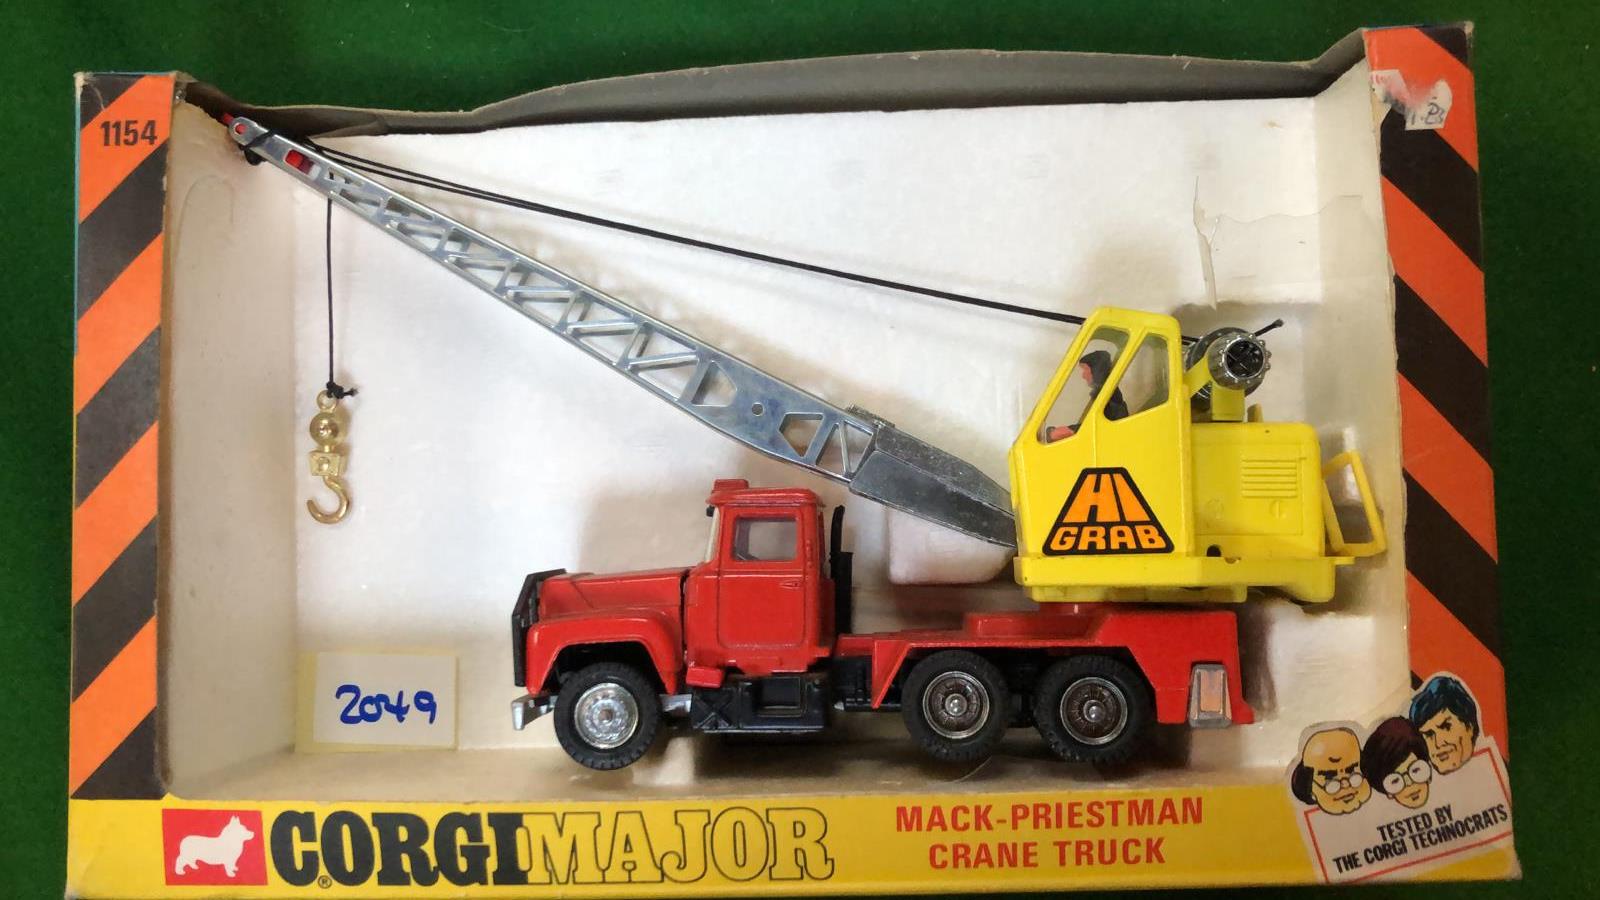 Corgi Major Mack-Priestman Crane Truck # 1154 1973 Red And Yellow Complete In Box